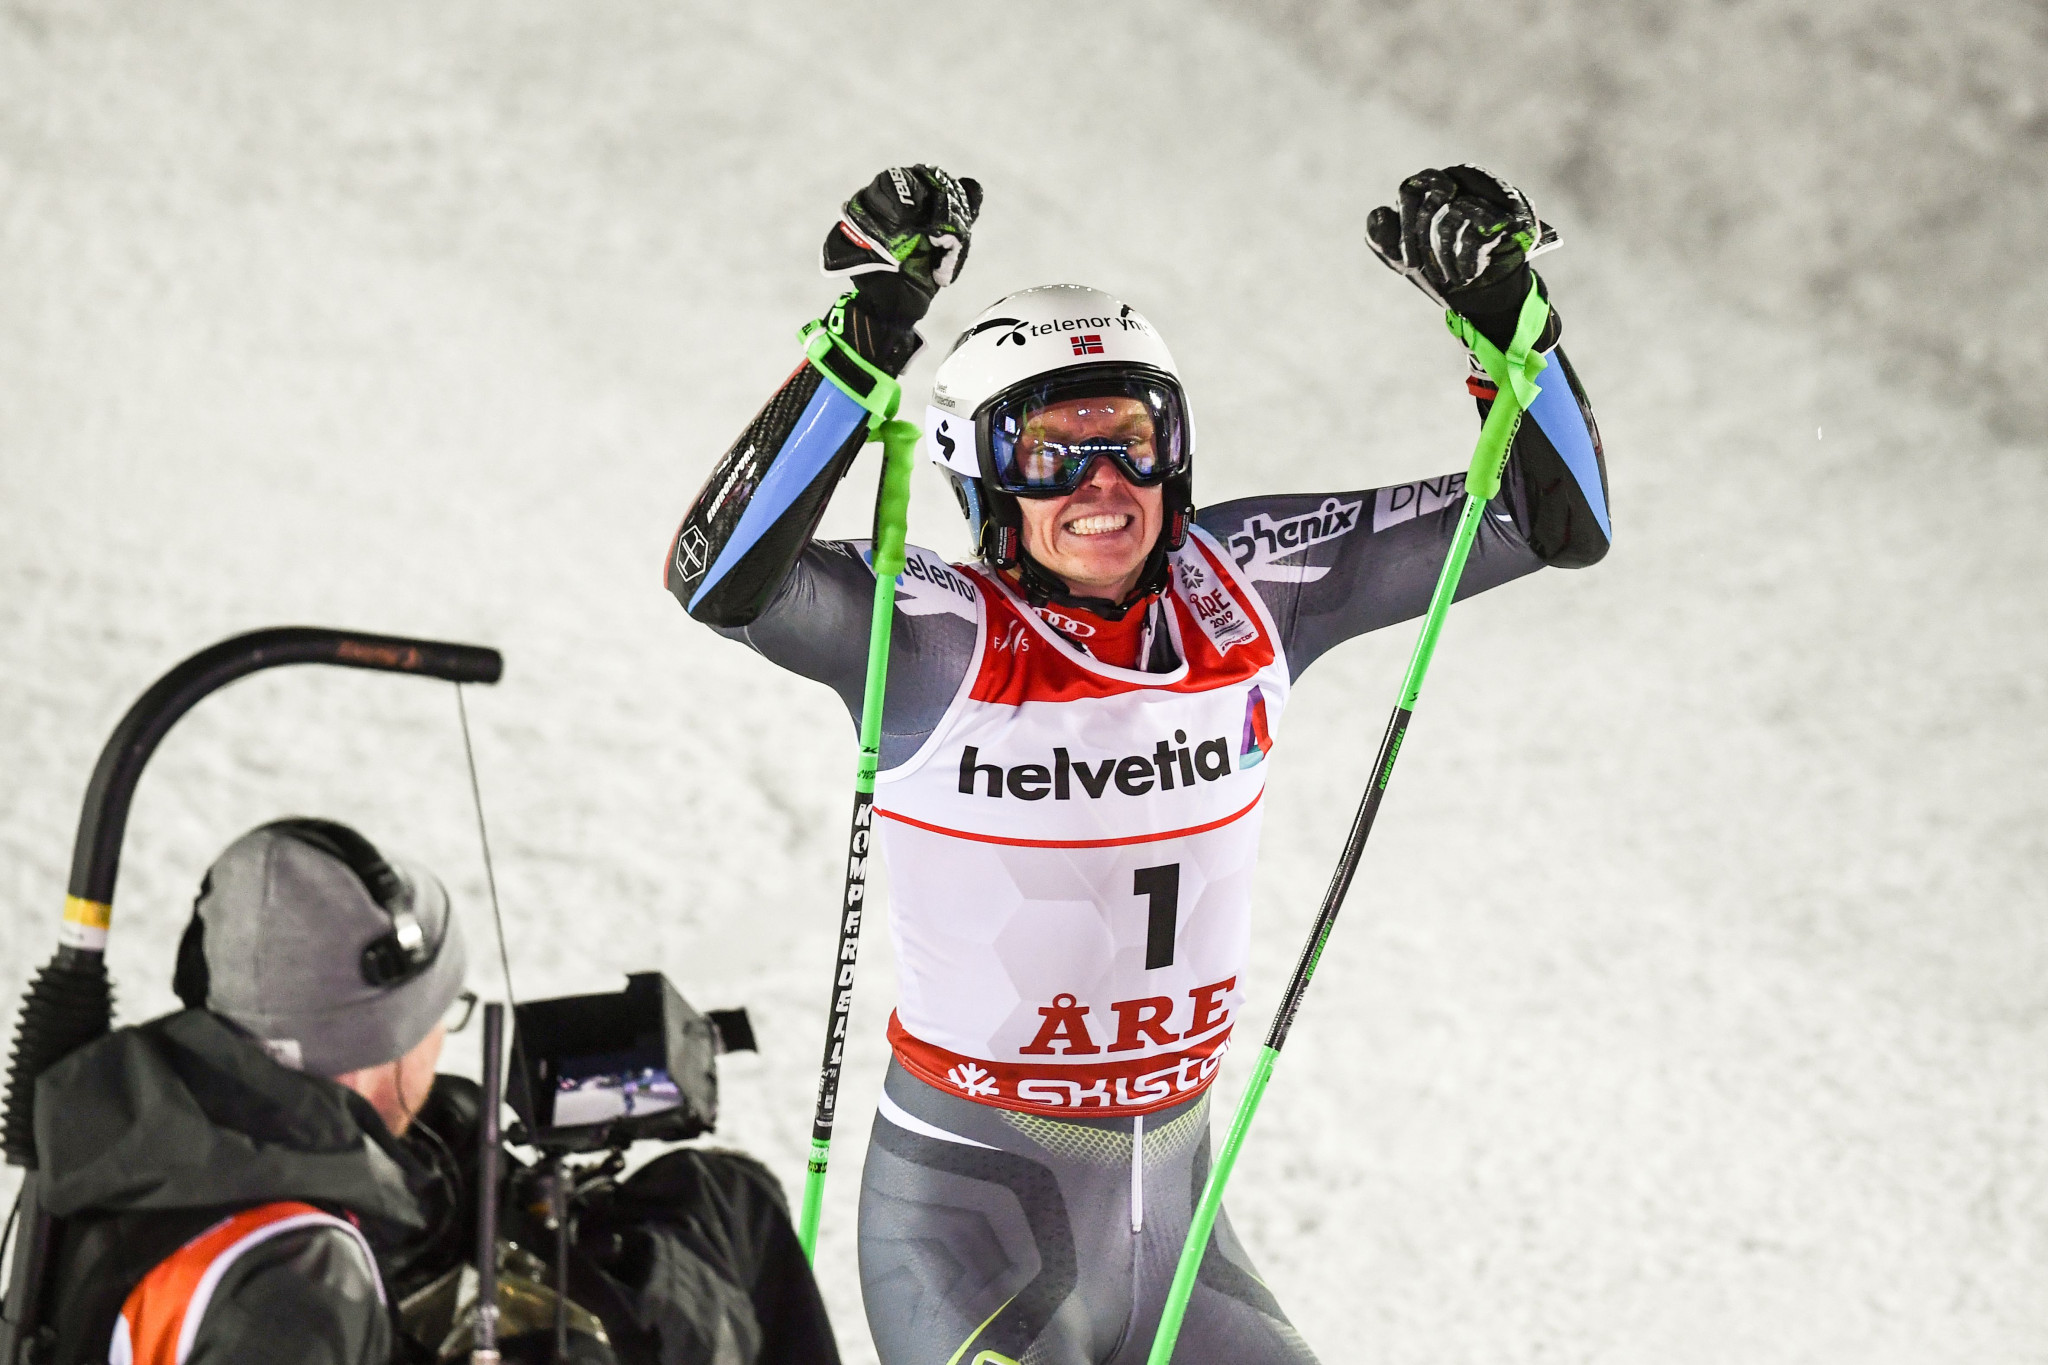 Norway's Kristoffersen holds off Hirscher to win giant slalom gold at FIS Alpine World Ski Championships